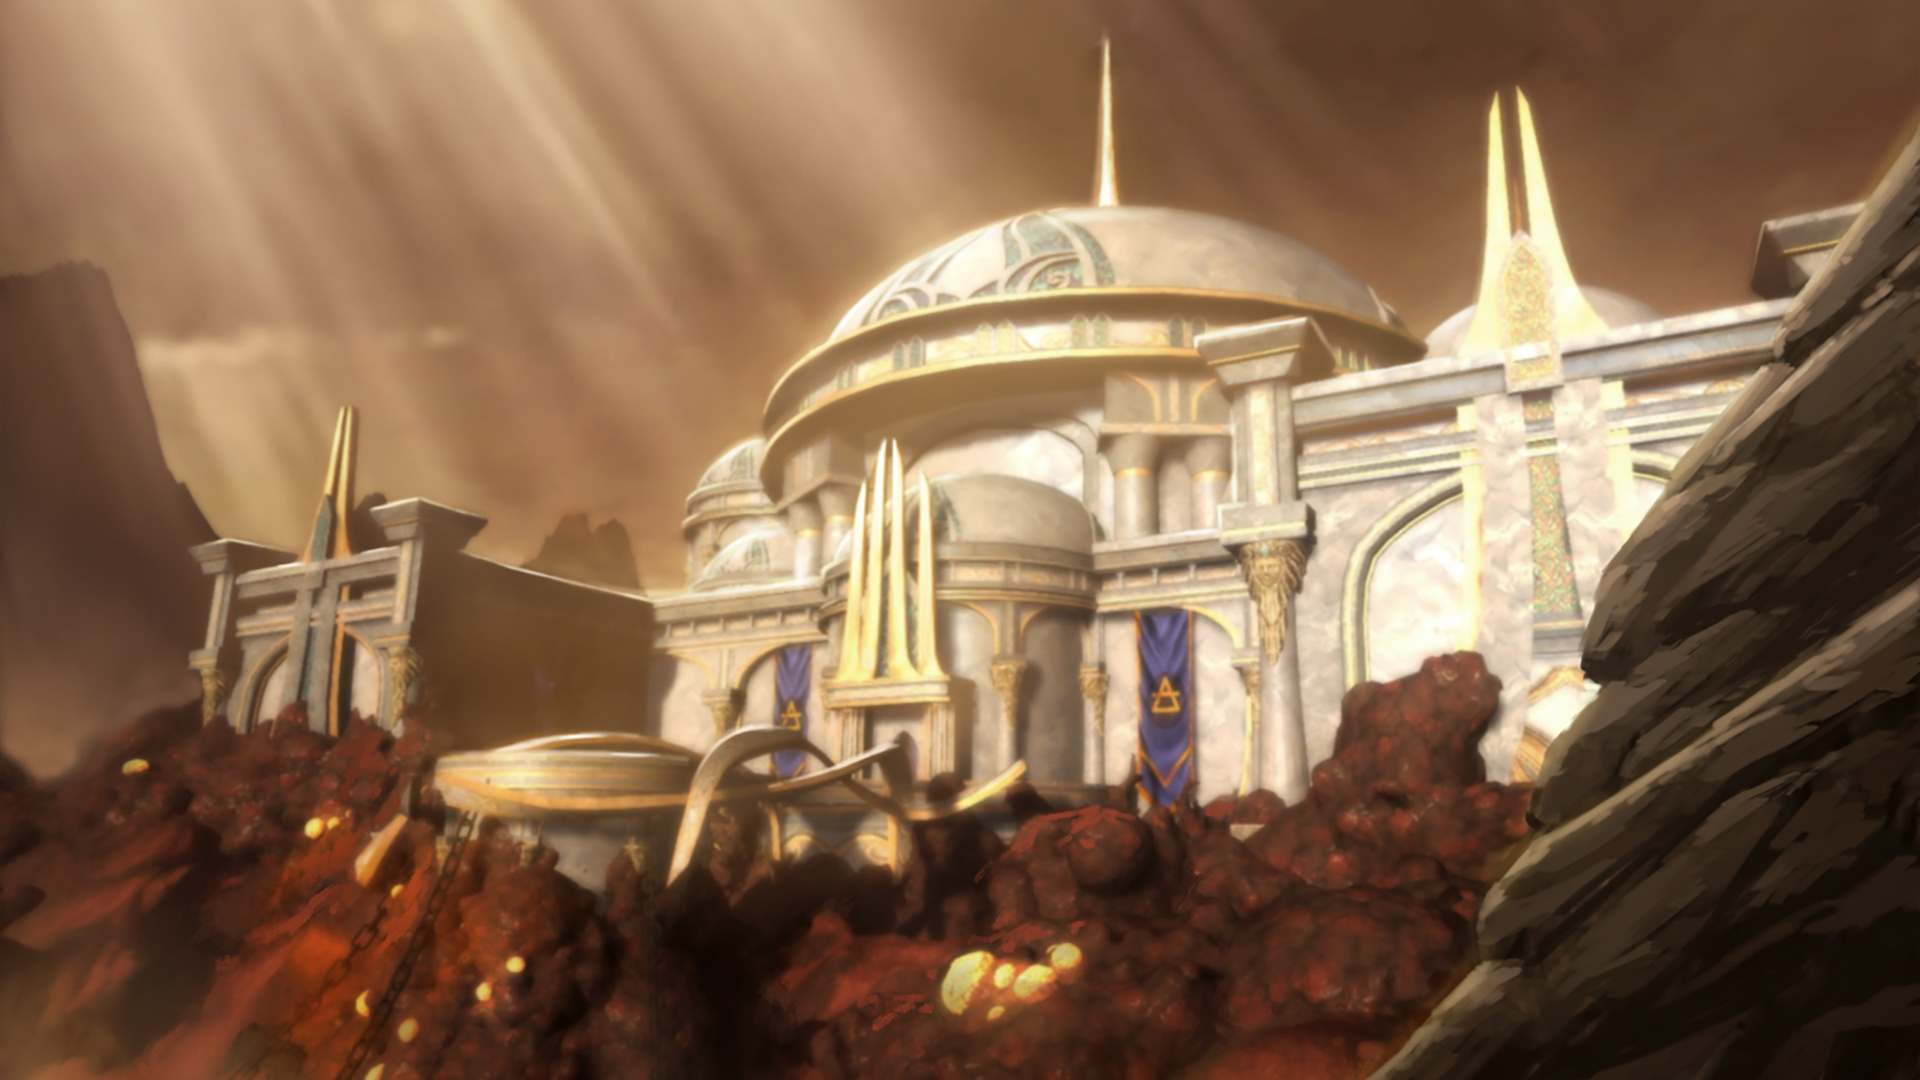 Neverwinter: The Redeemed Citadel